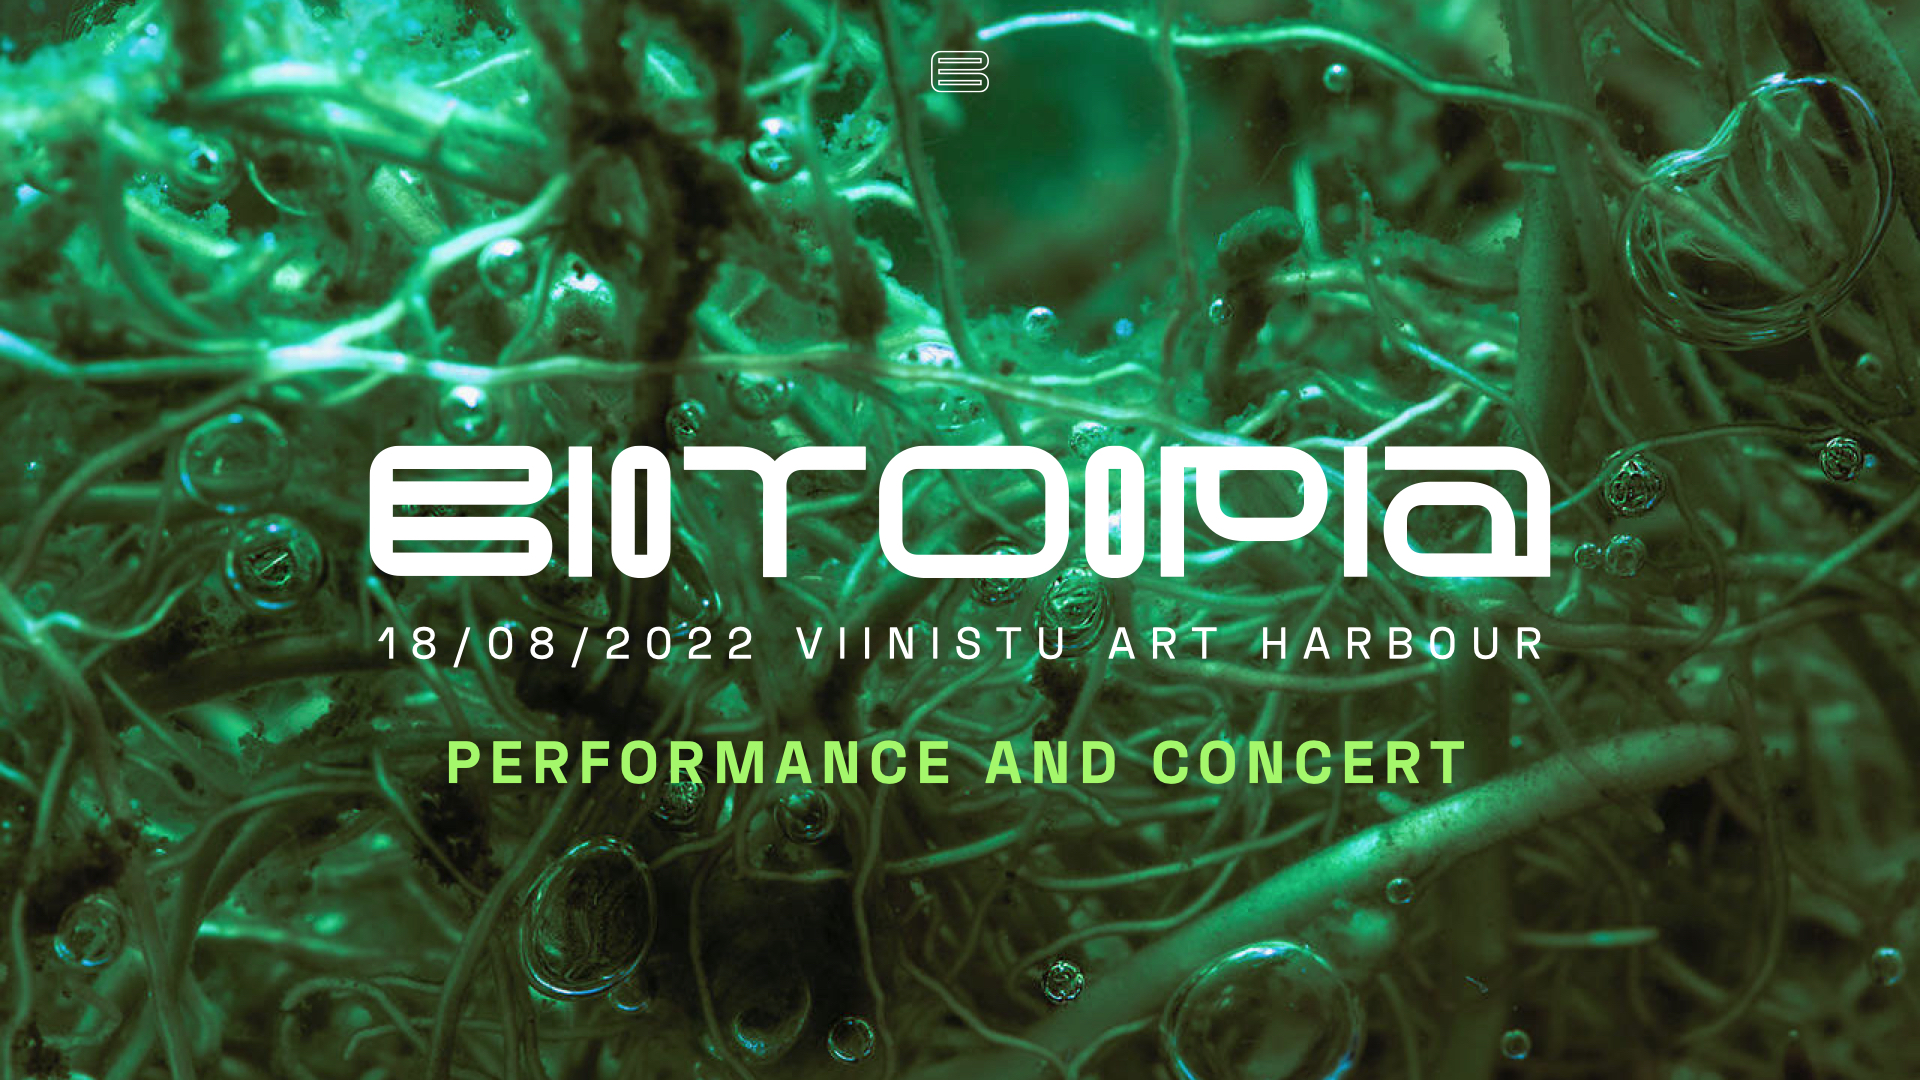 Biotoopia’22 Art and Music Performances